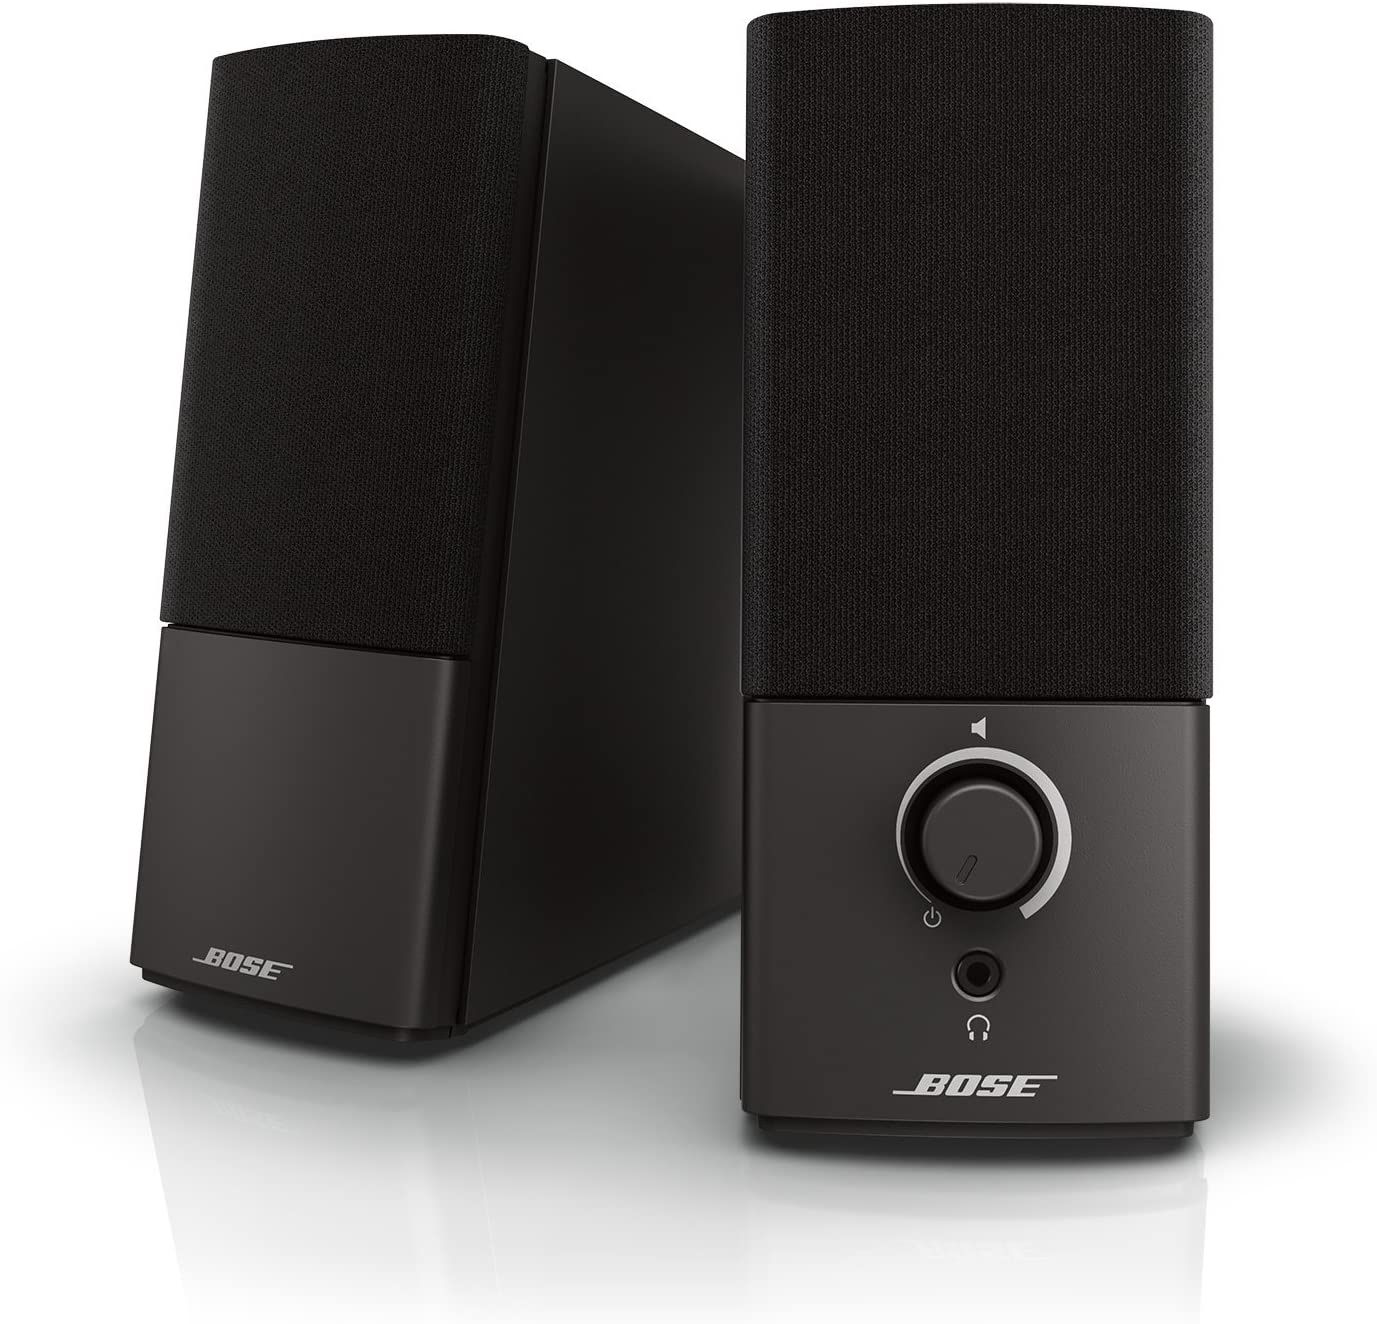 Bose Companion 2 series III multimedia speakers for PC